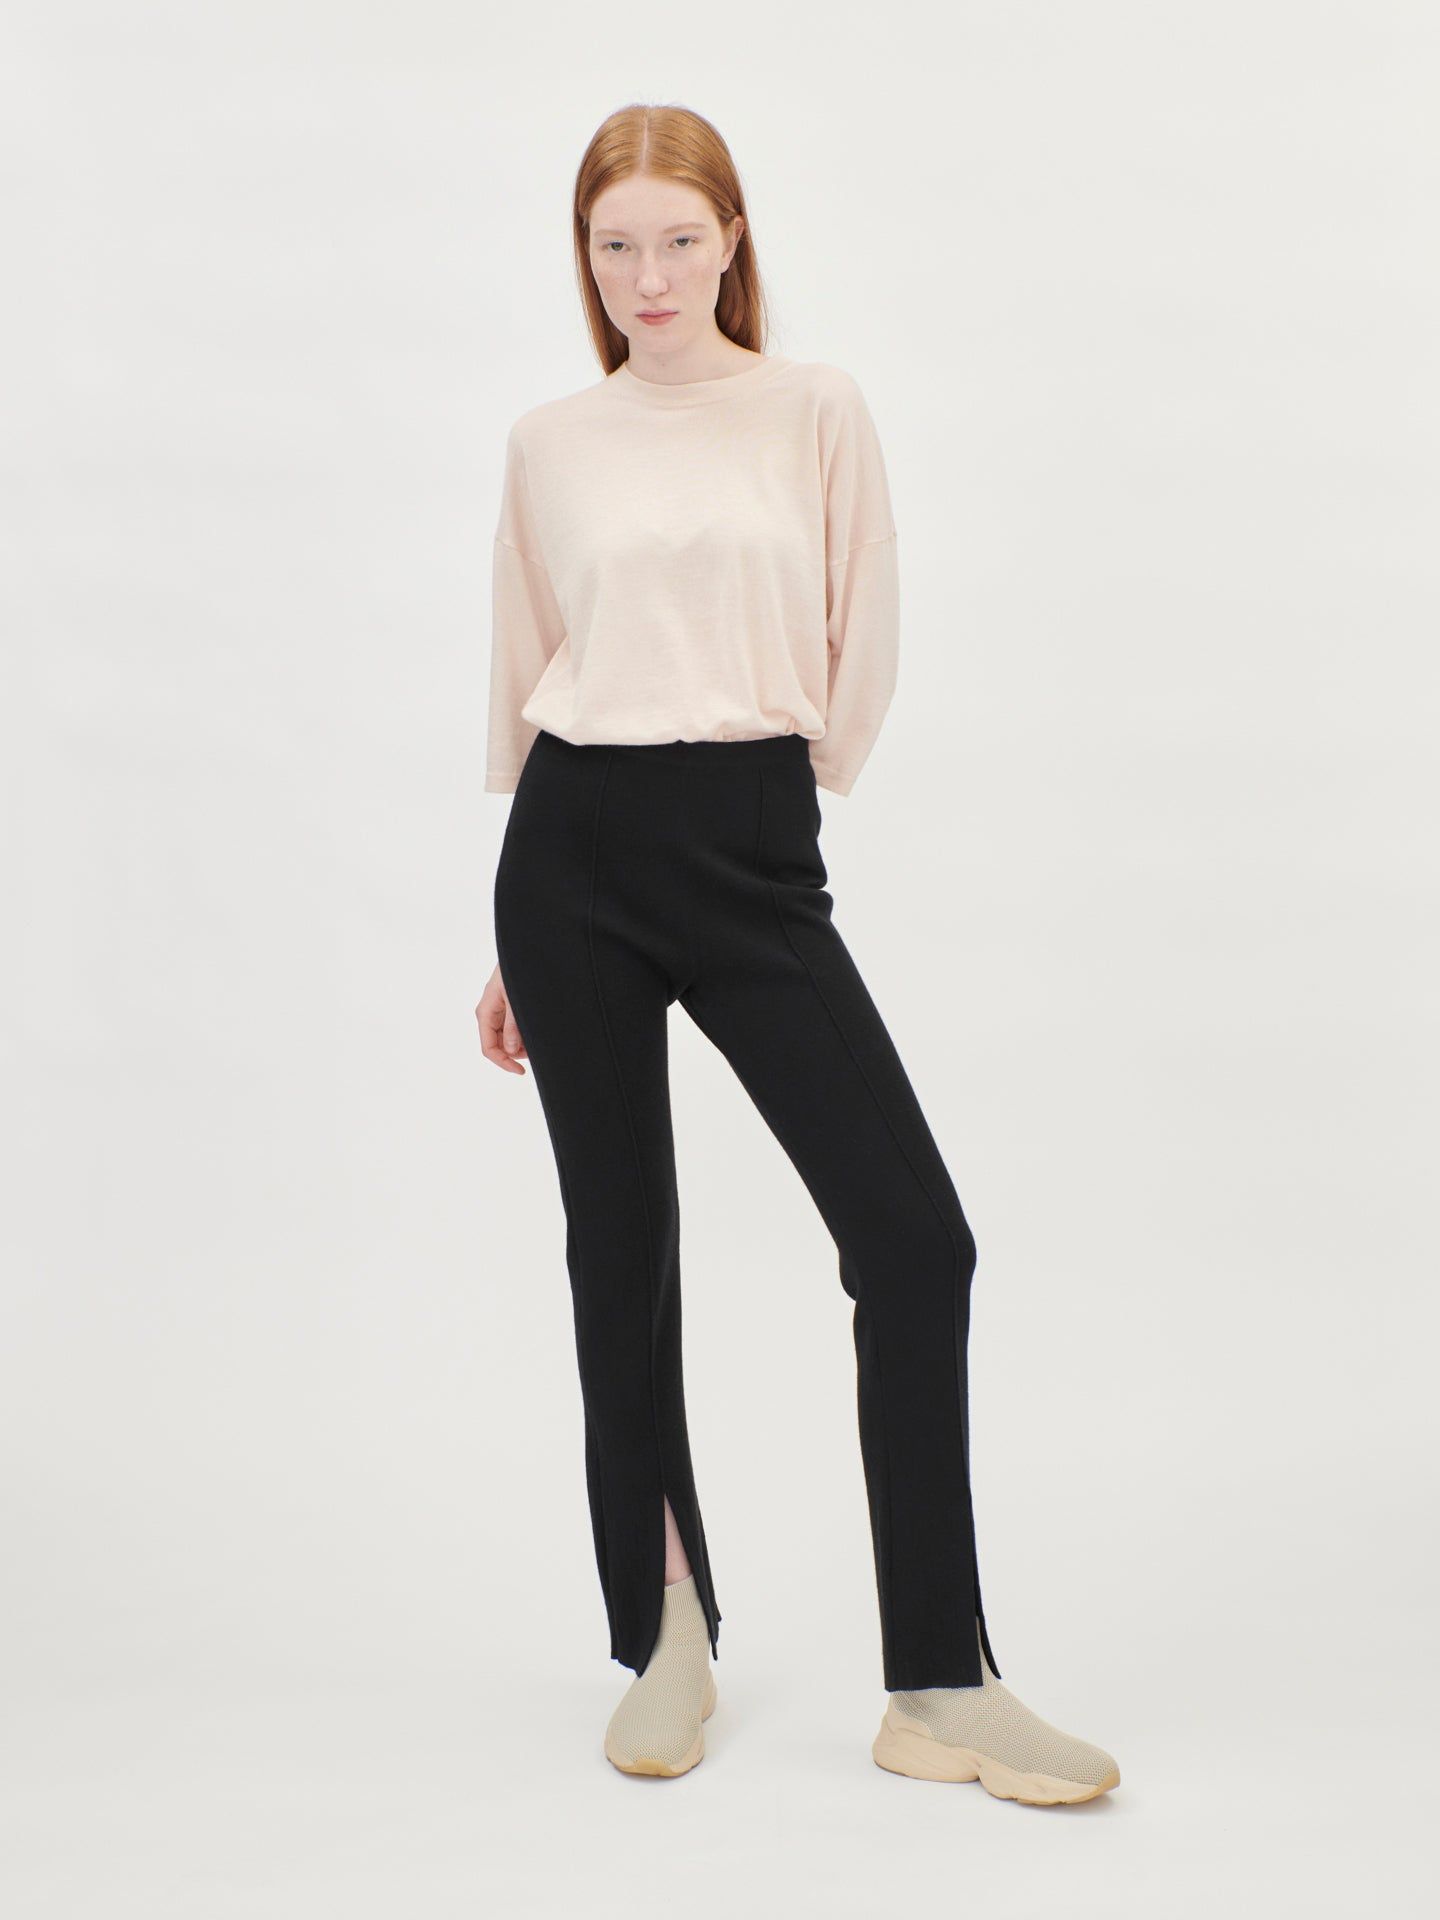 Women's Cashmere Front Slit Trousers Black - Gobi Cashmere